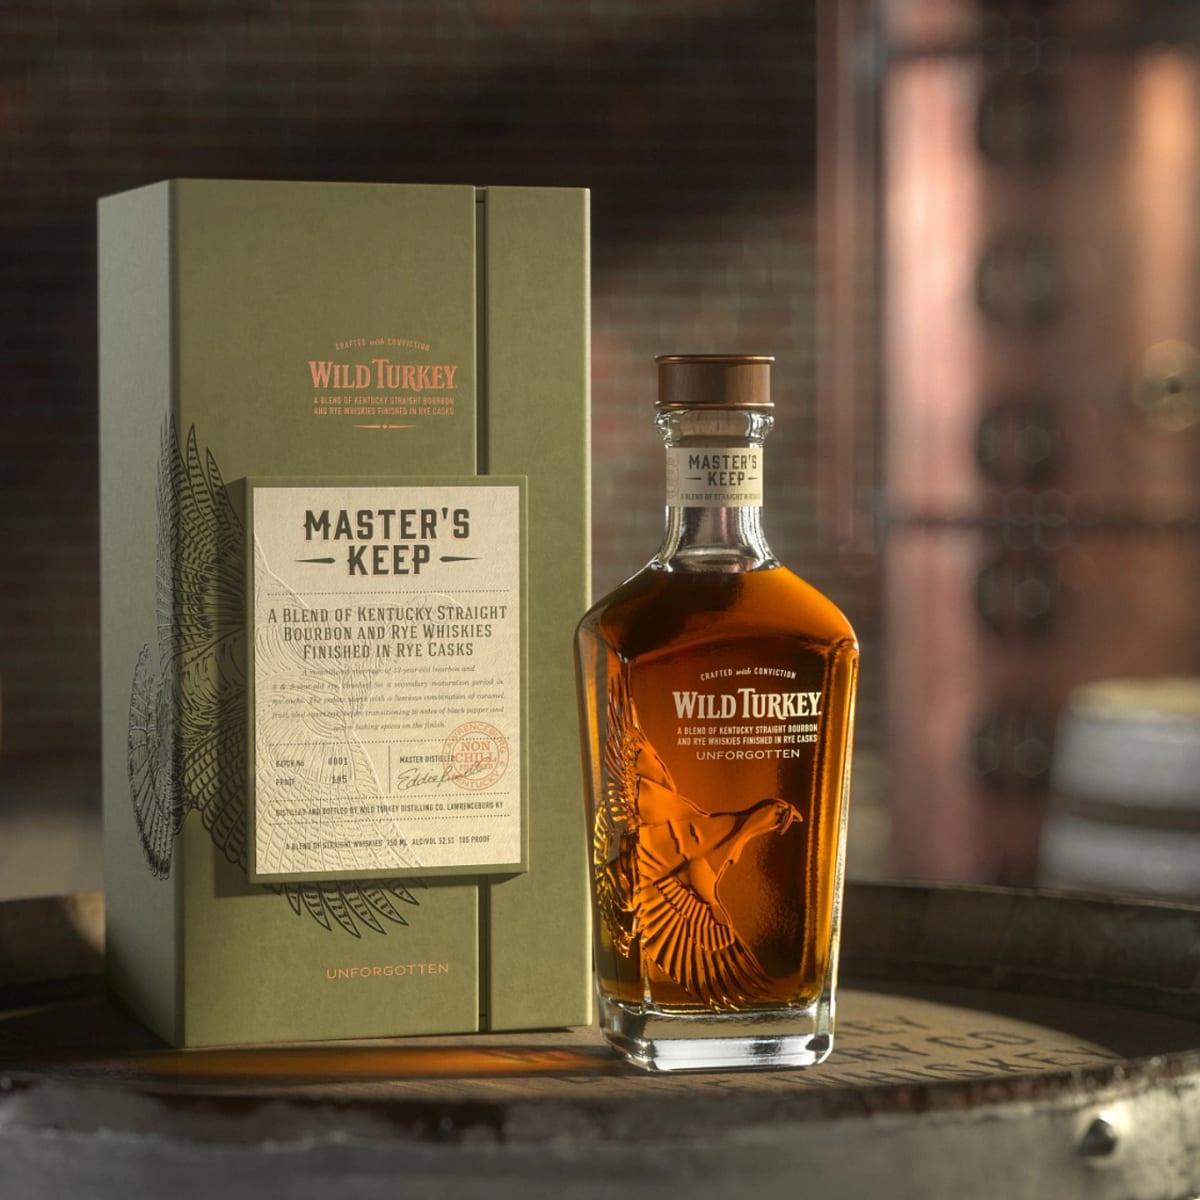 Wild Turkey Master's Keep Unforgotten Kentucky Blended Bourbon and Rye Whiskey 750ml - Booze House